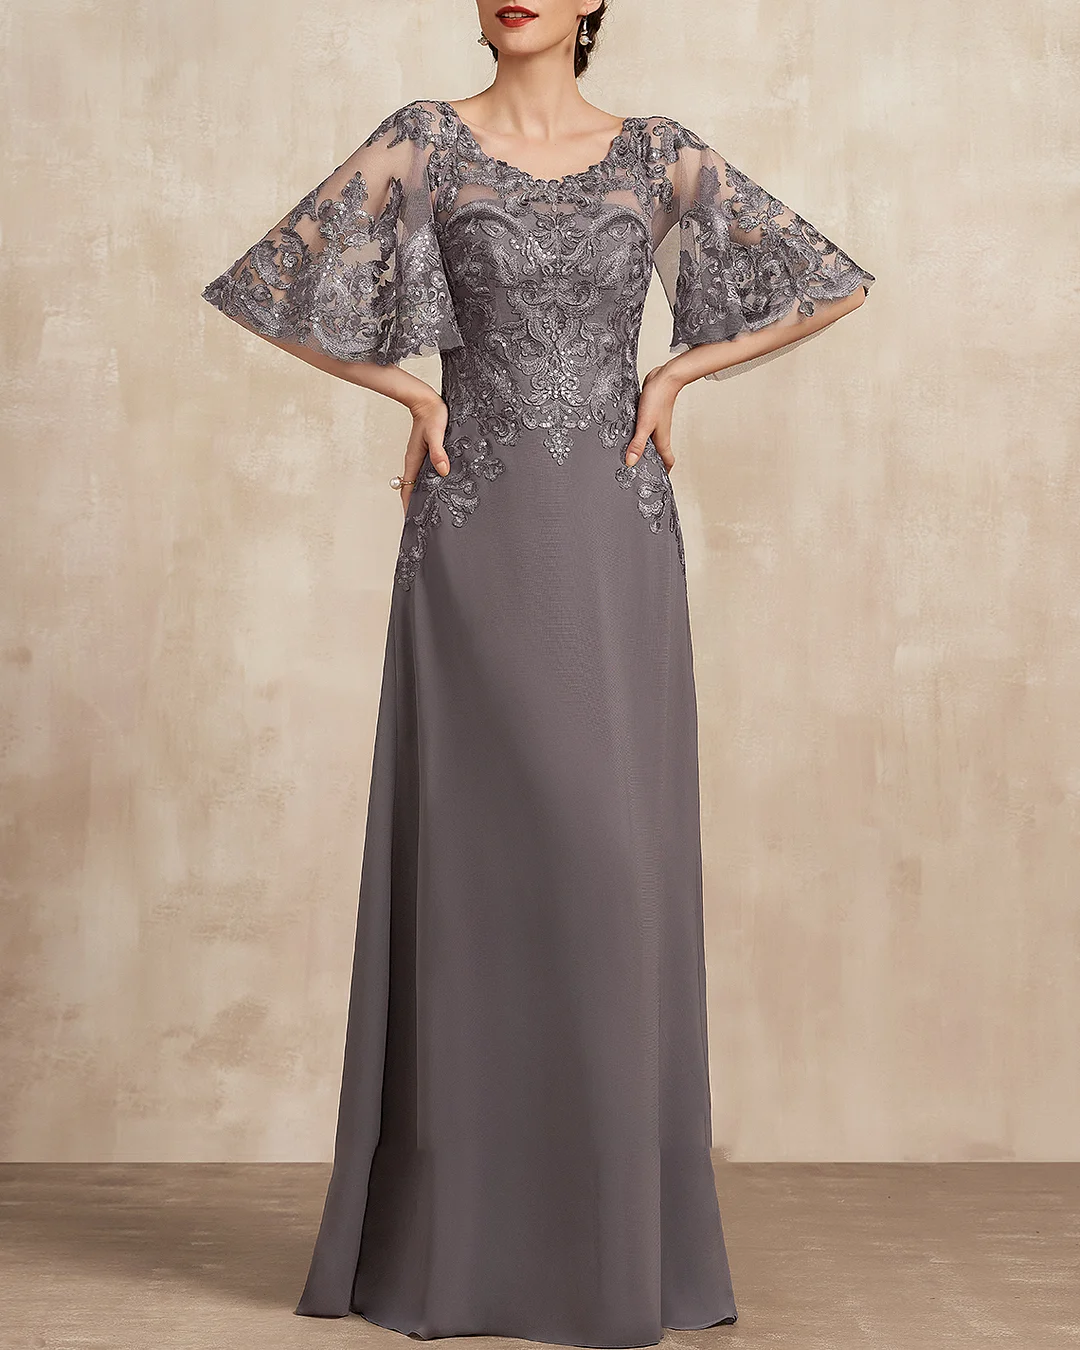 Elegant Fashion Lace Sequin Dress